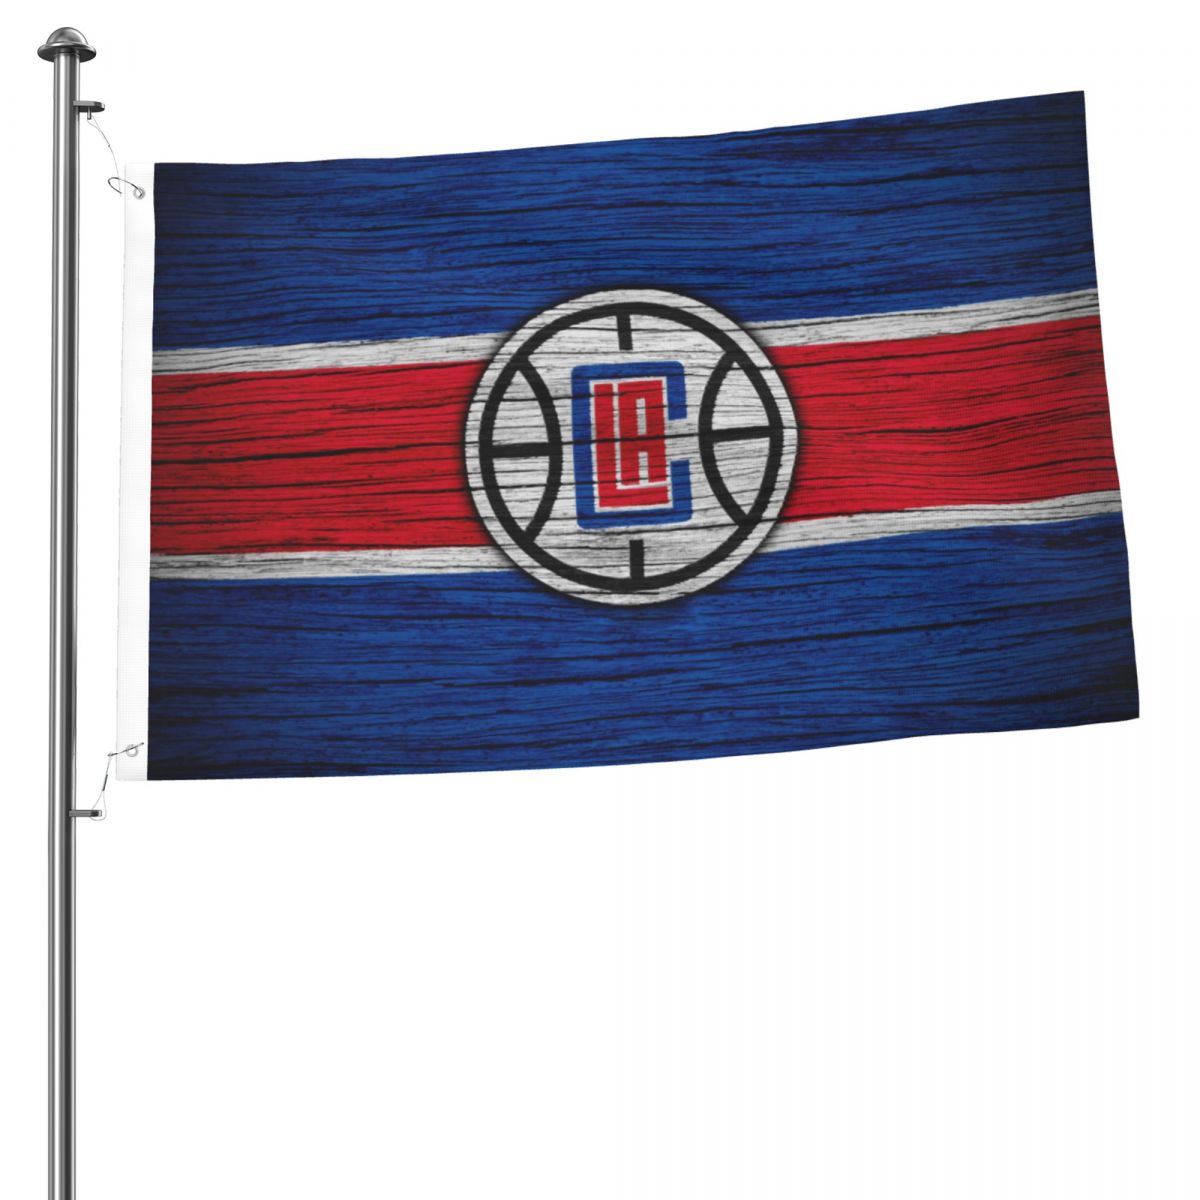 Los Angeles Clippers Hardwood Design 2x3 FT UV Resistant Flag